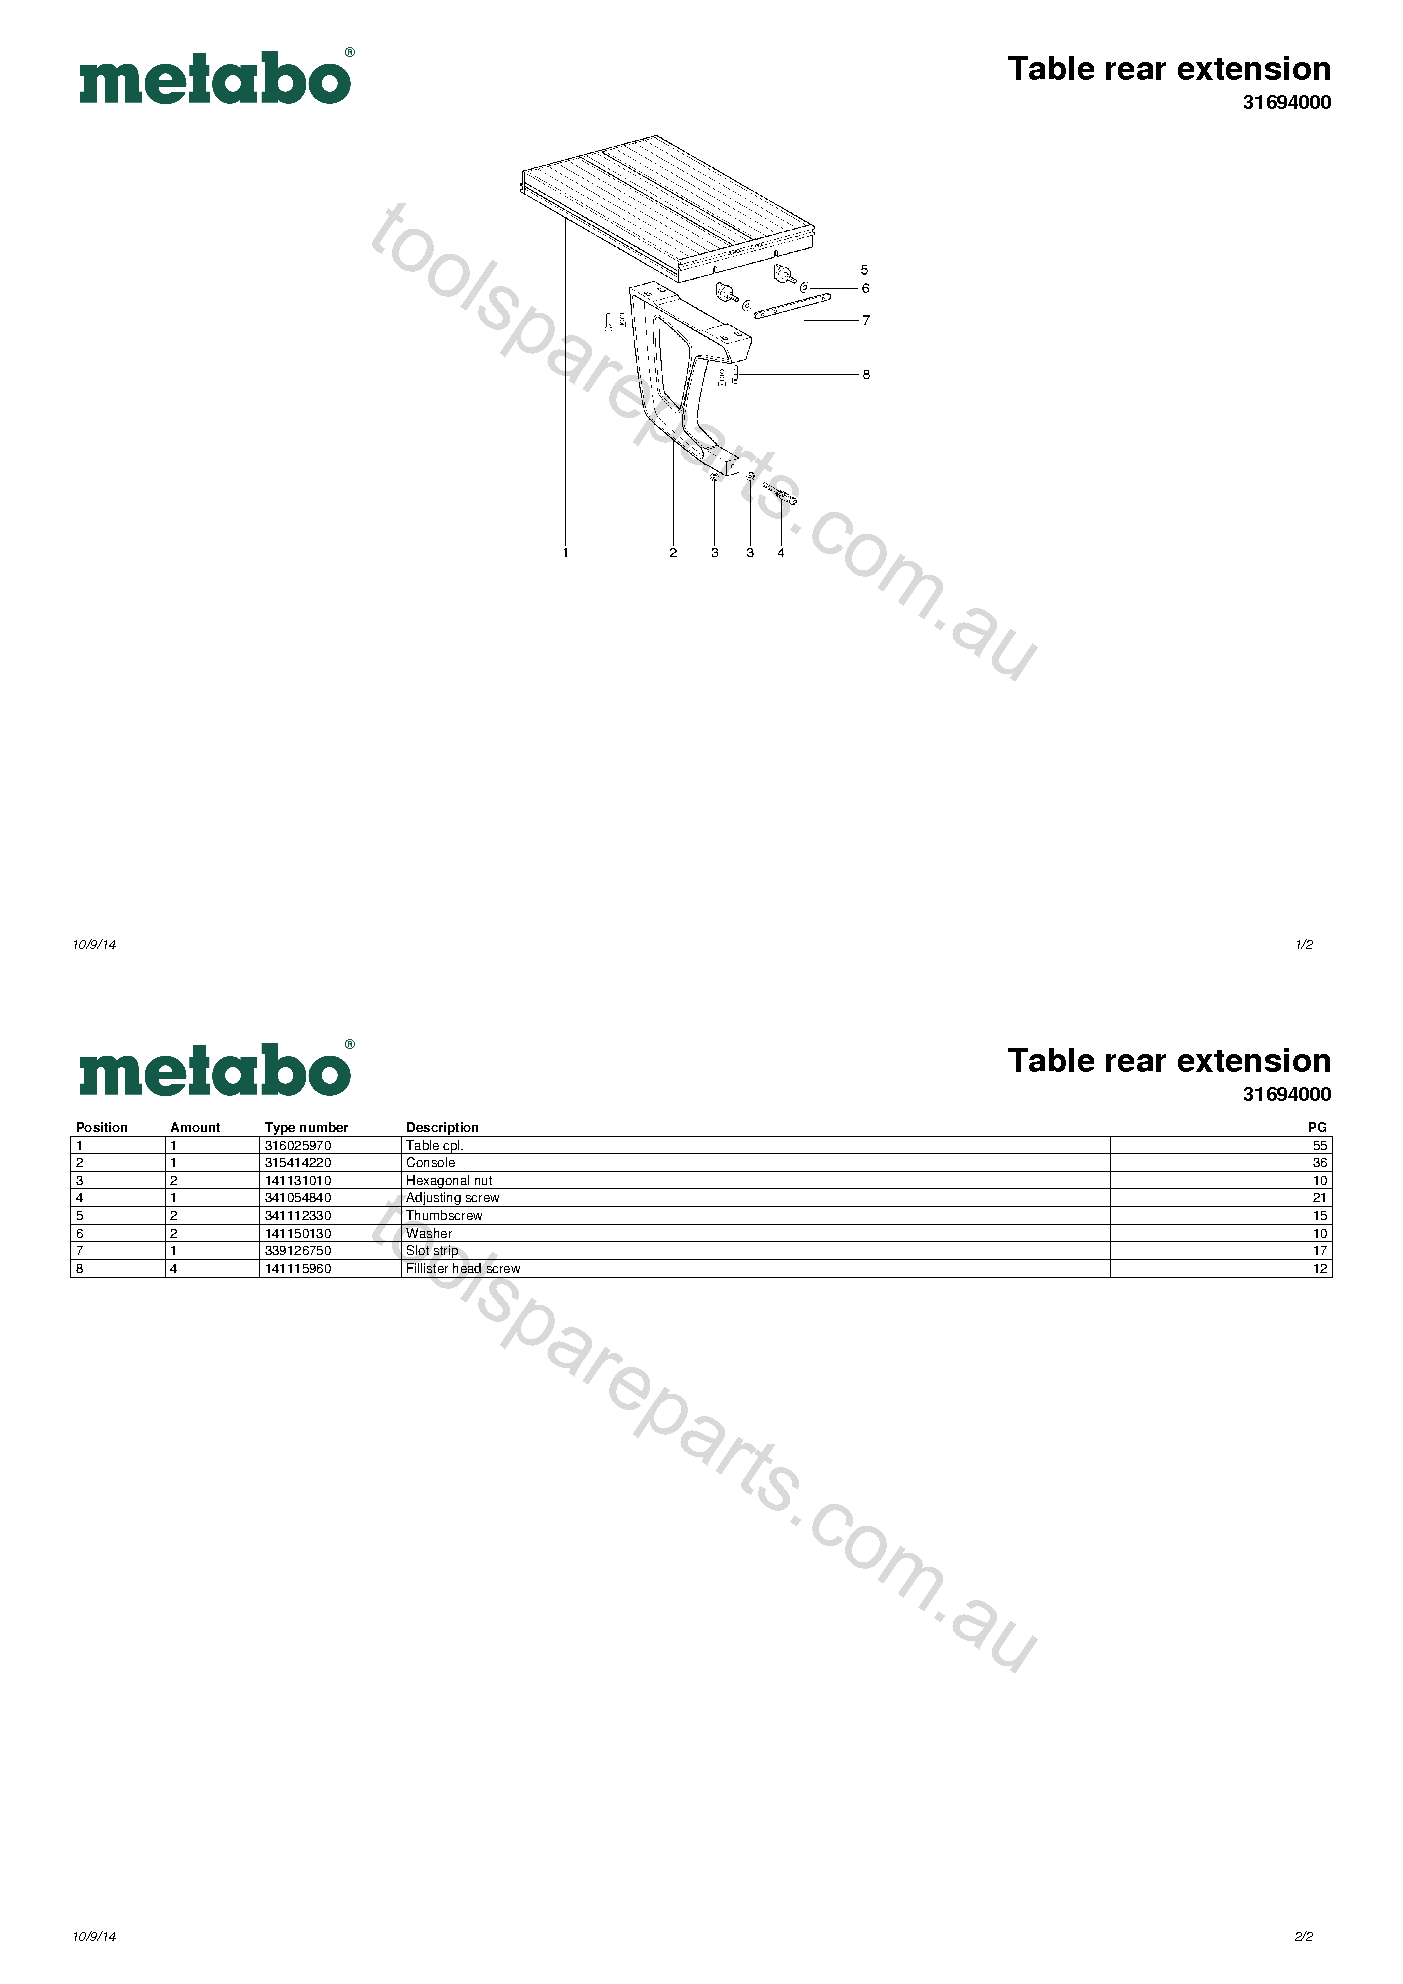 Metabo Table rear extension 31694000  Diagram 1